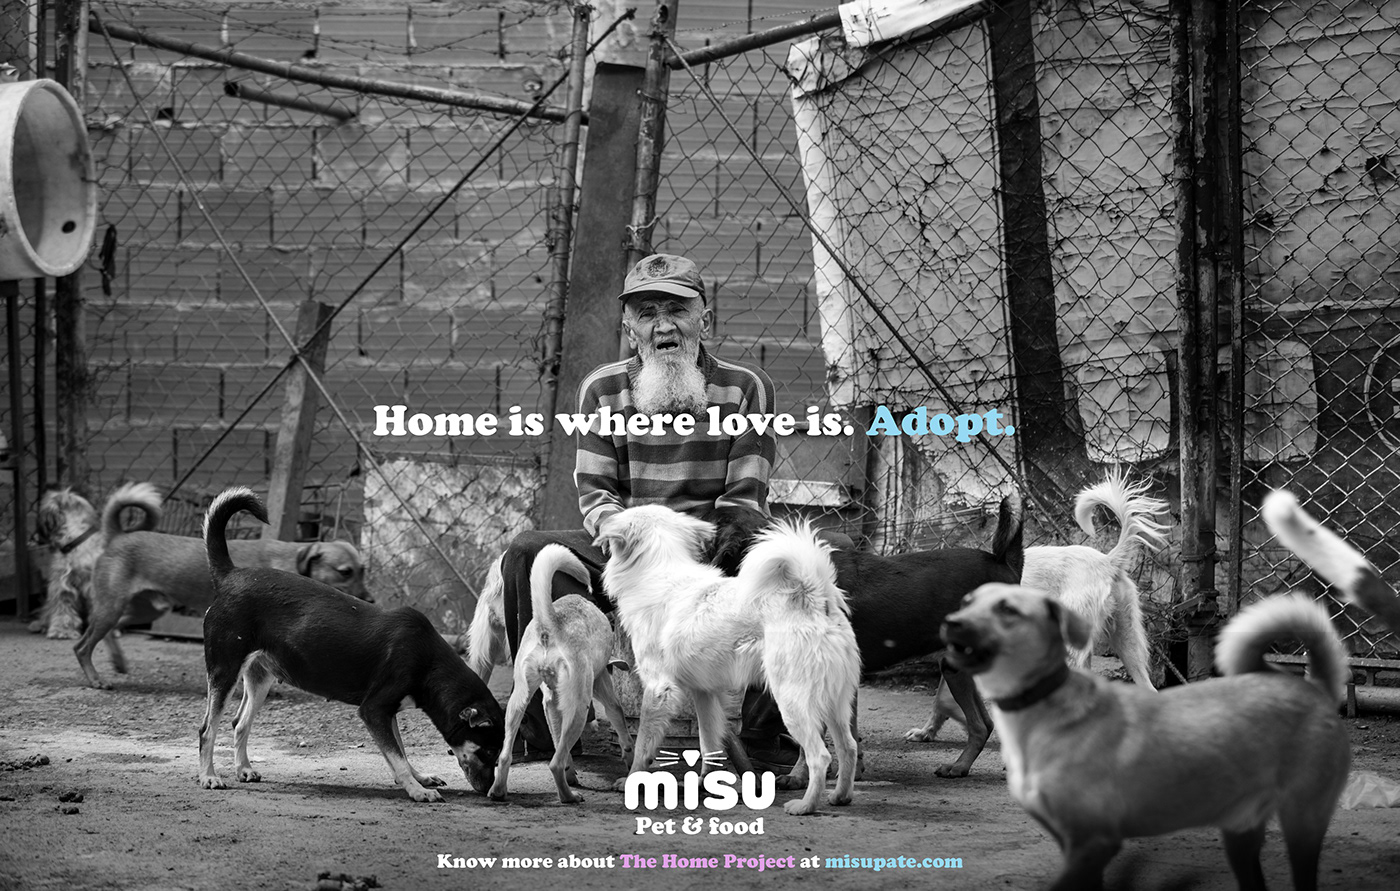 dog homeless misu Pet &Food publicidad the home project venezuela Pet adoption Advertising 